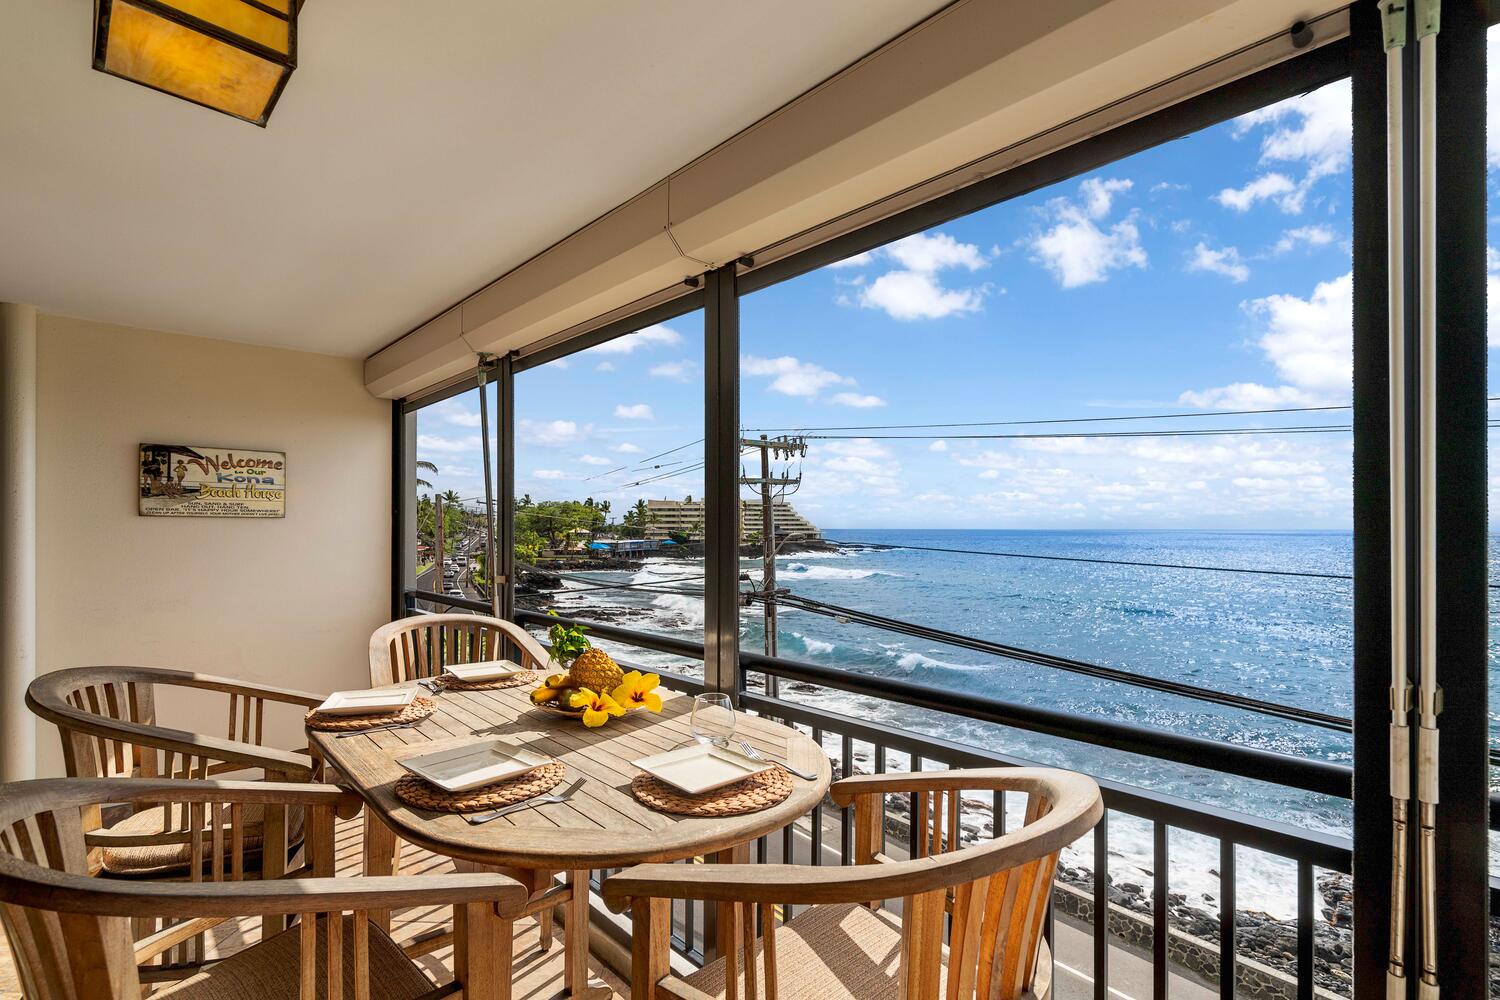 Kailua Kona Vacation Rentals, Kona Alii 302 - A nice spot for breakfasts or intimate dinner.